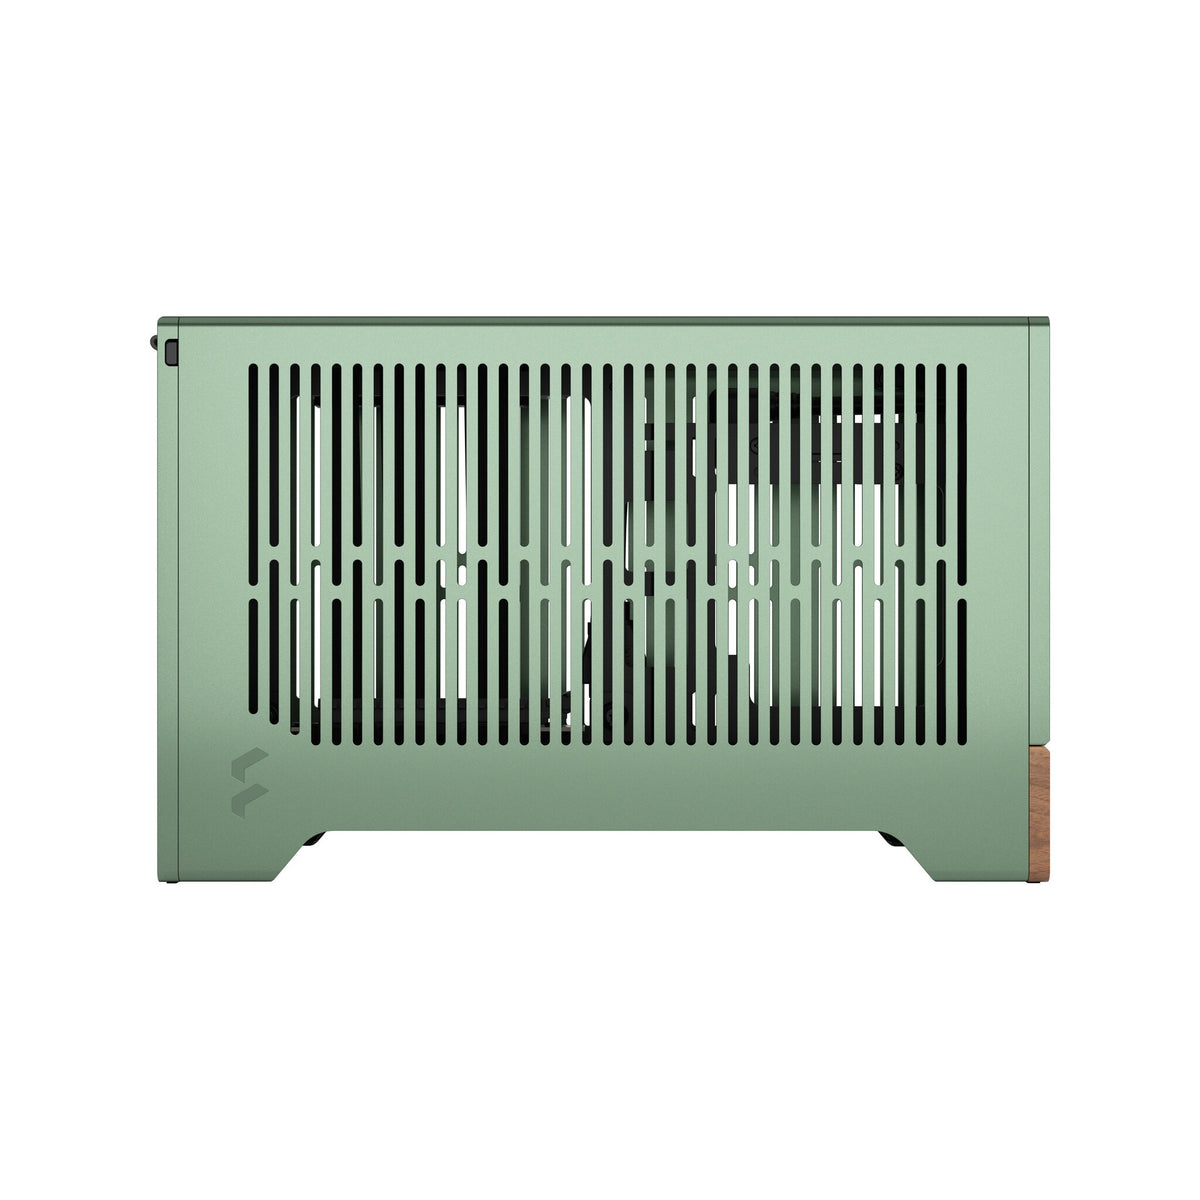 Fractal Design Terra - Mini ITX Desktop Case in Green